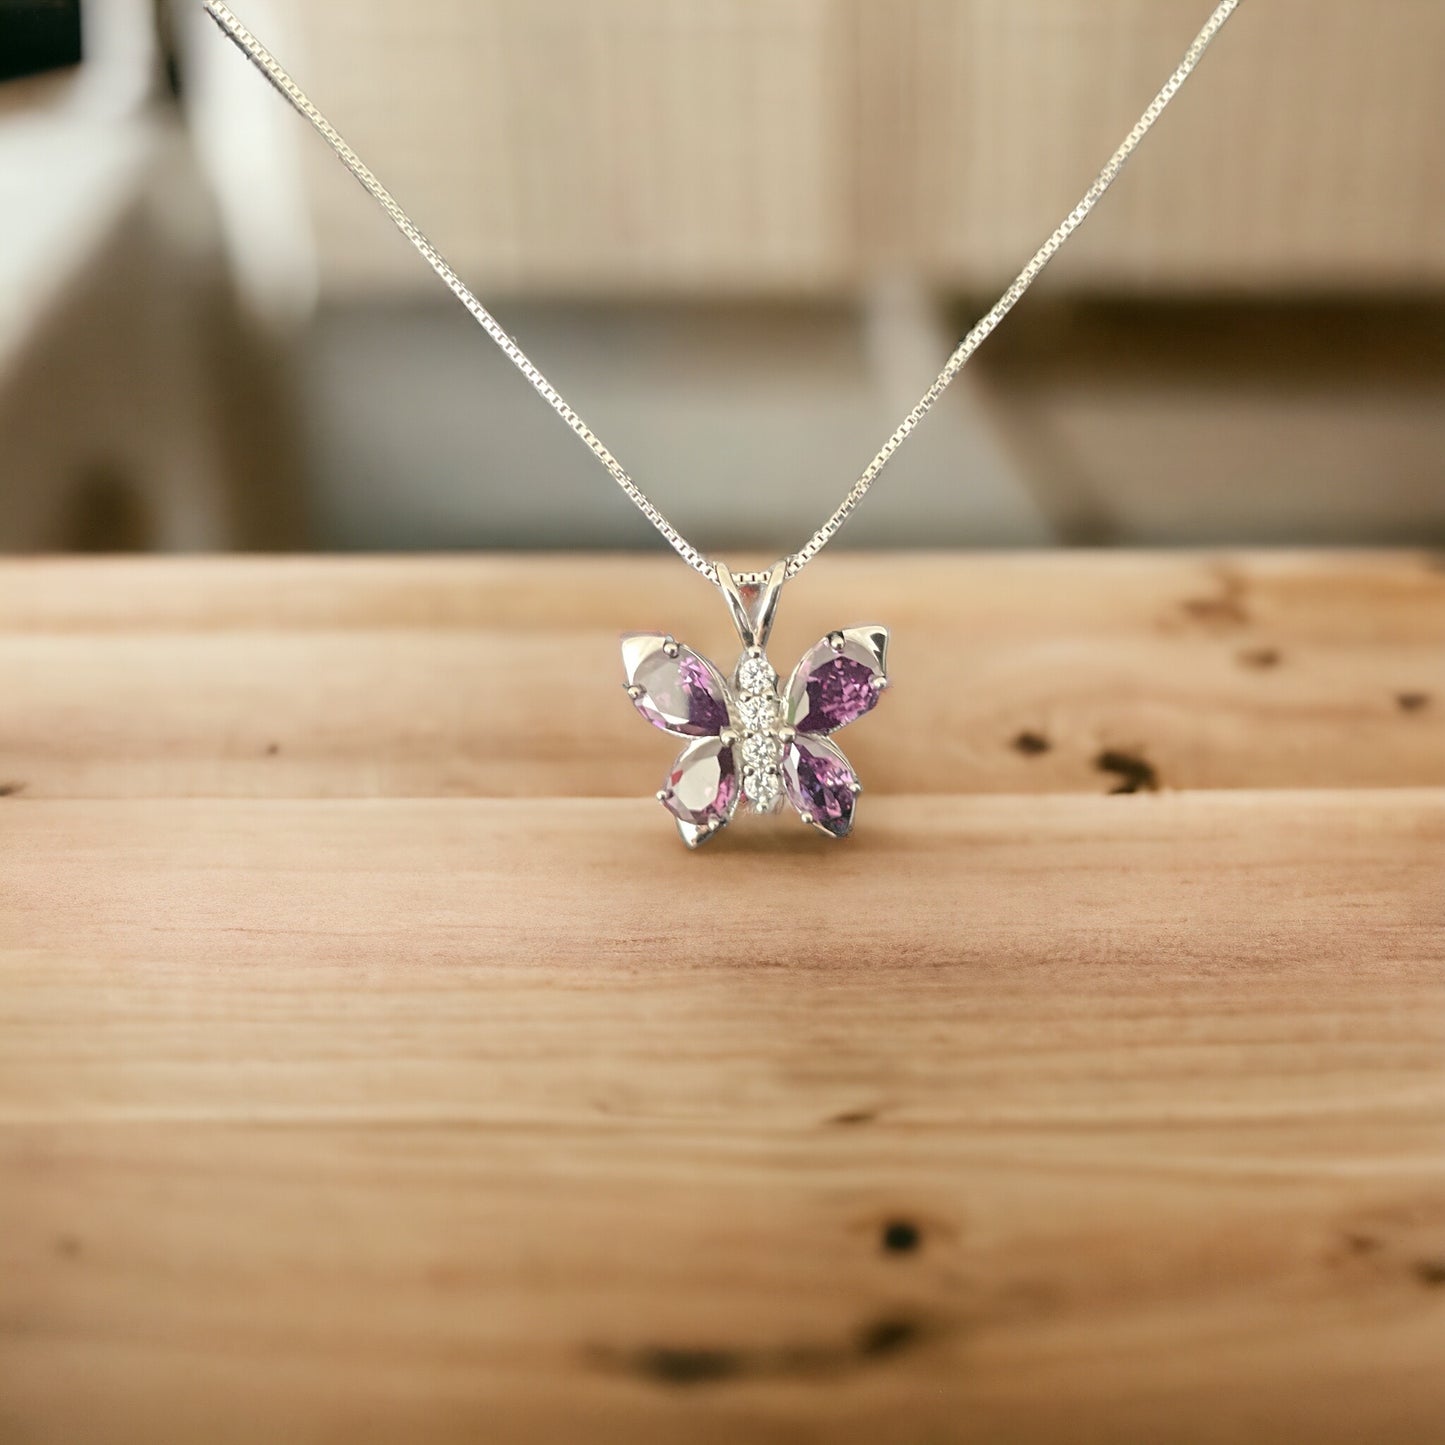 925 Sterling Silver Butterfly Pendant Necklace w/ Purple Amethyst CZ + Free Chain